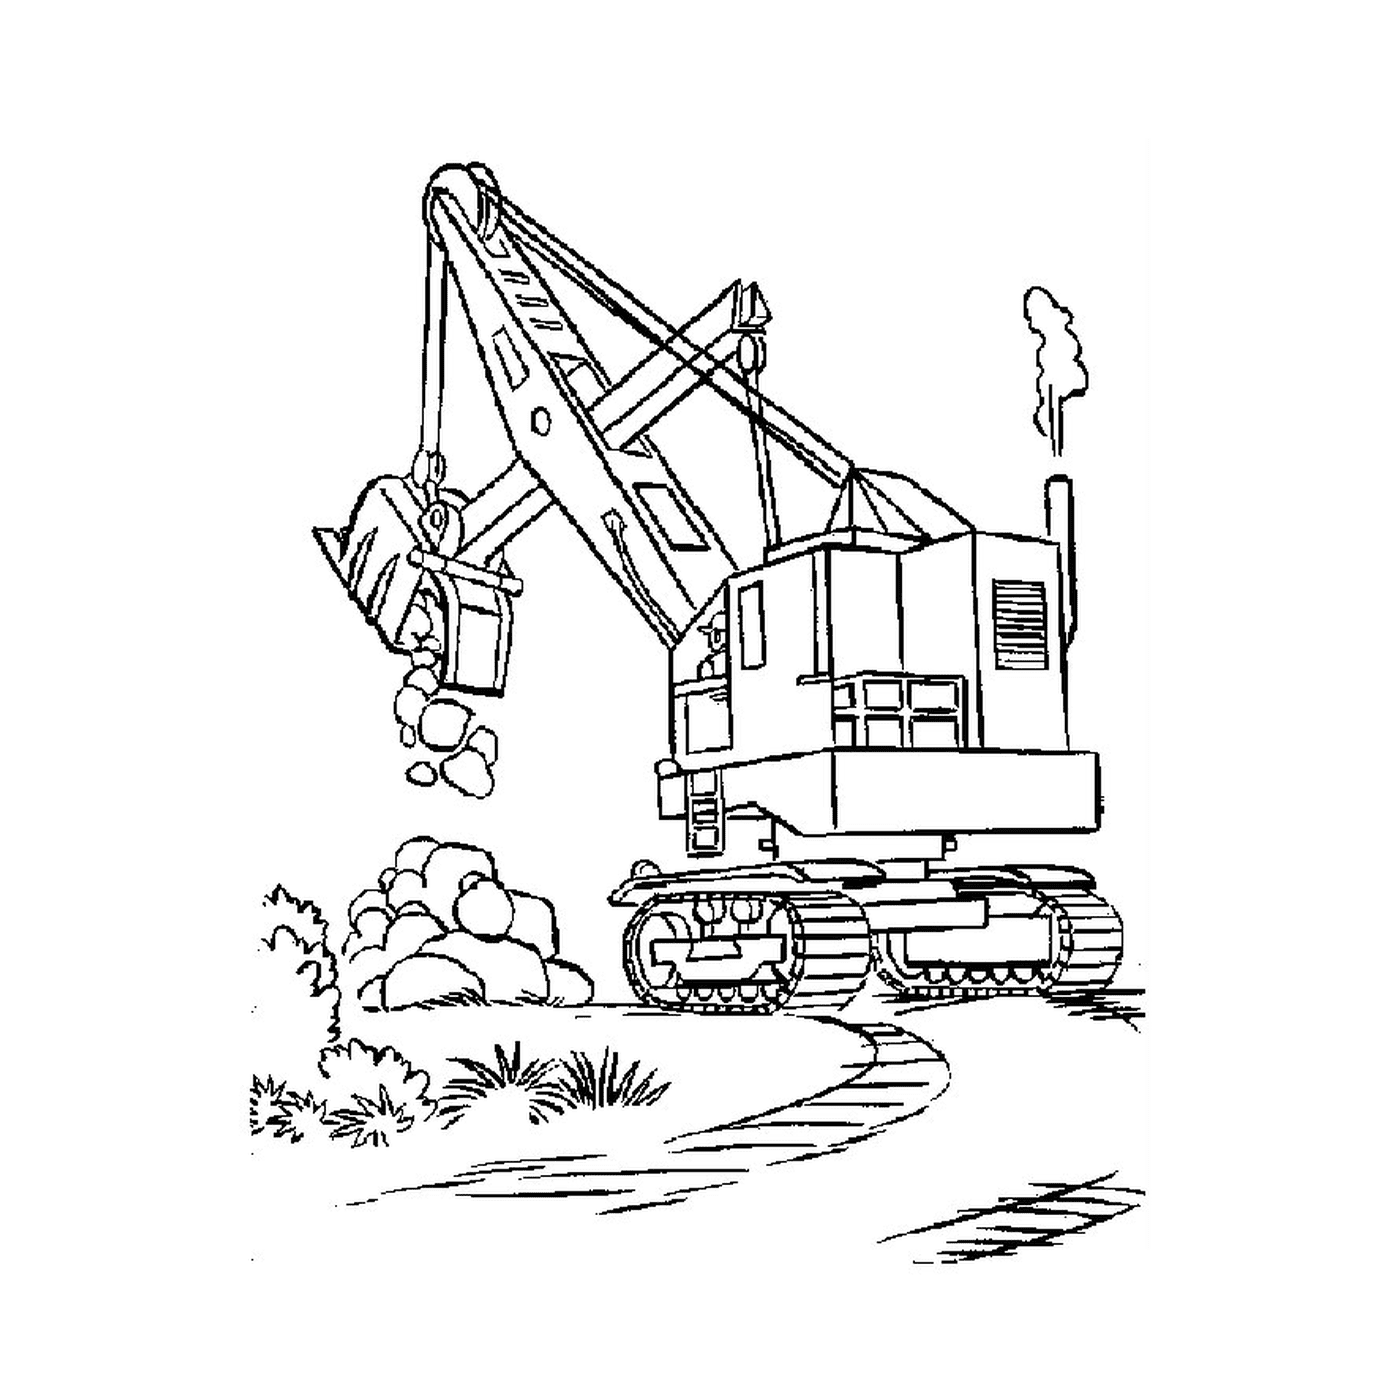  Crane on a dirt road 